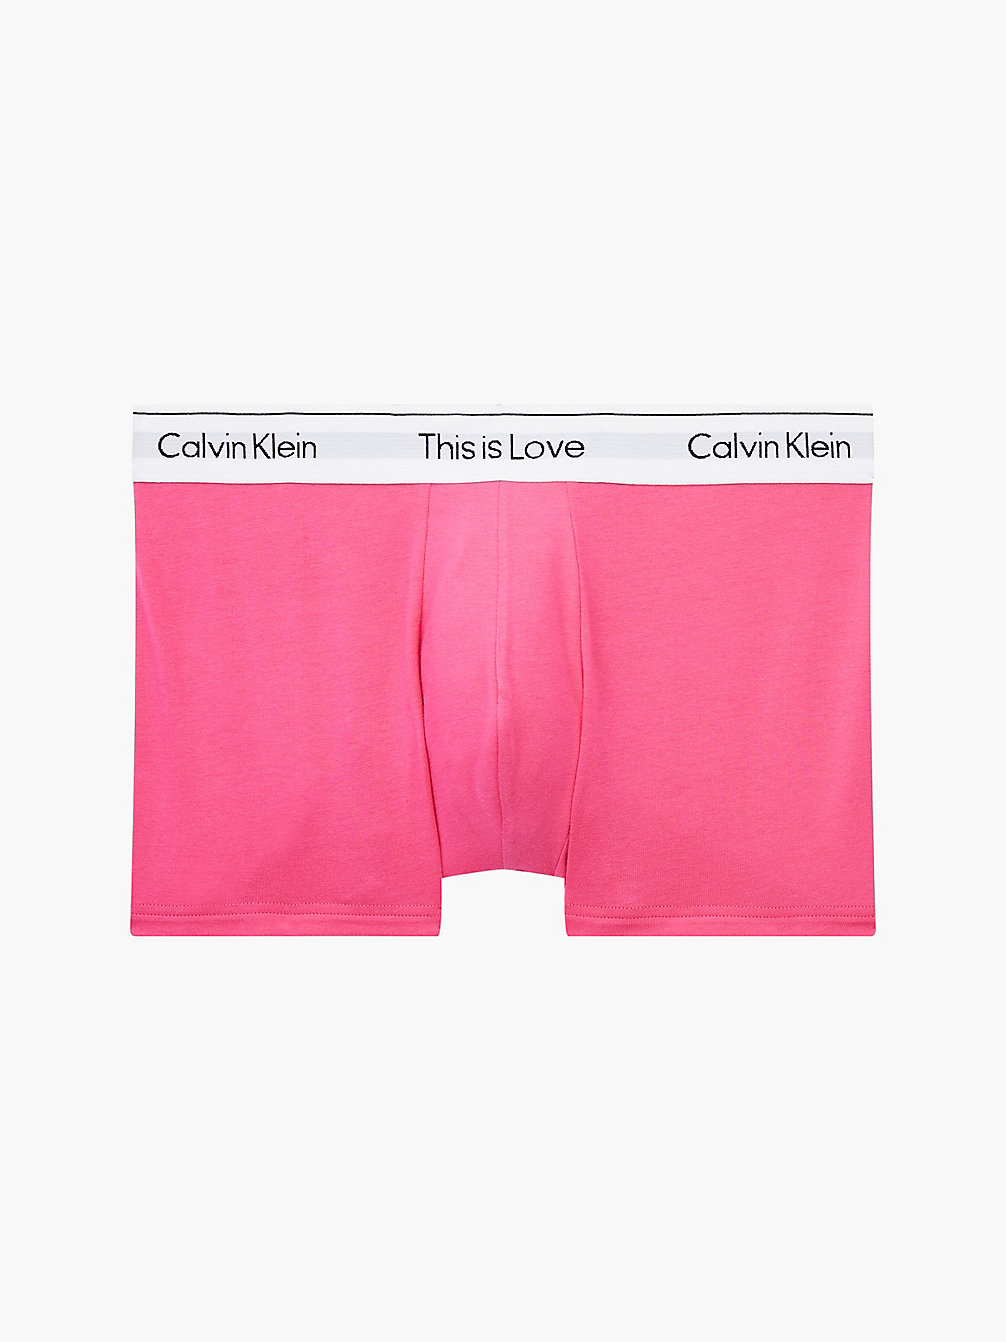 PINK FLAMBE Boxer - Pride undefined hommes Calvin Klein